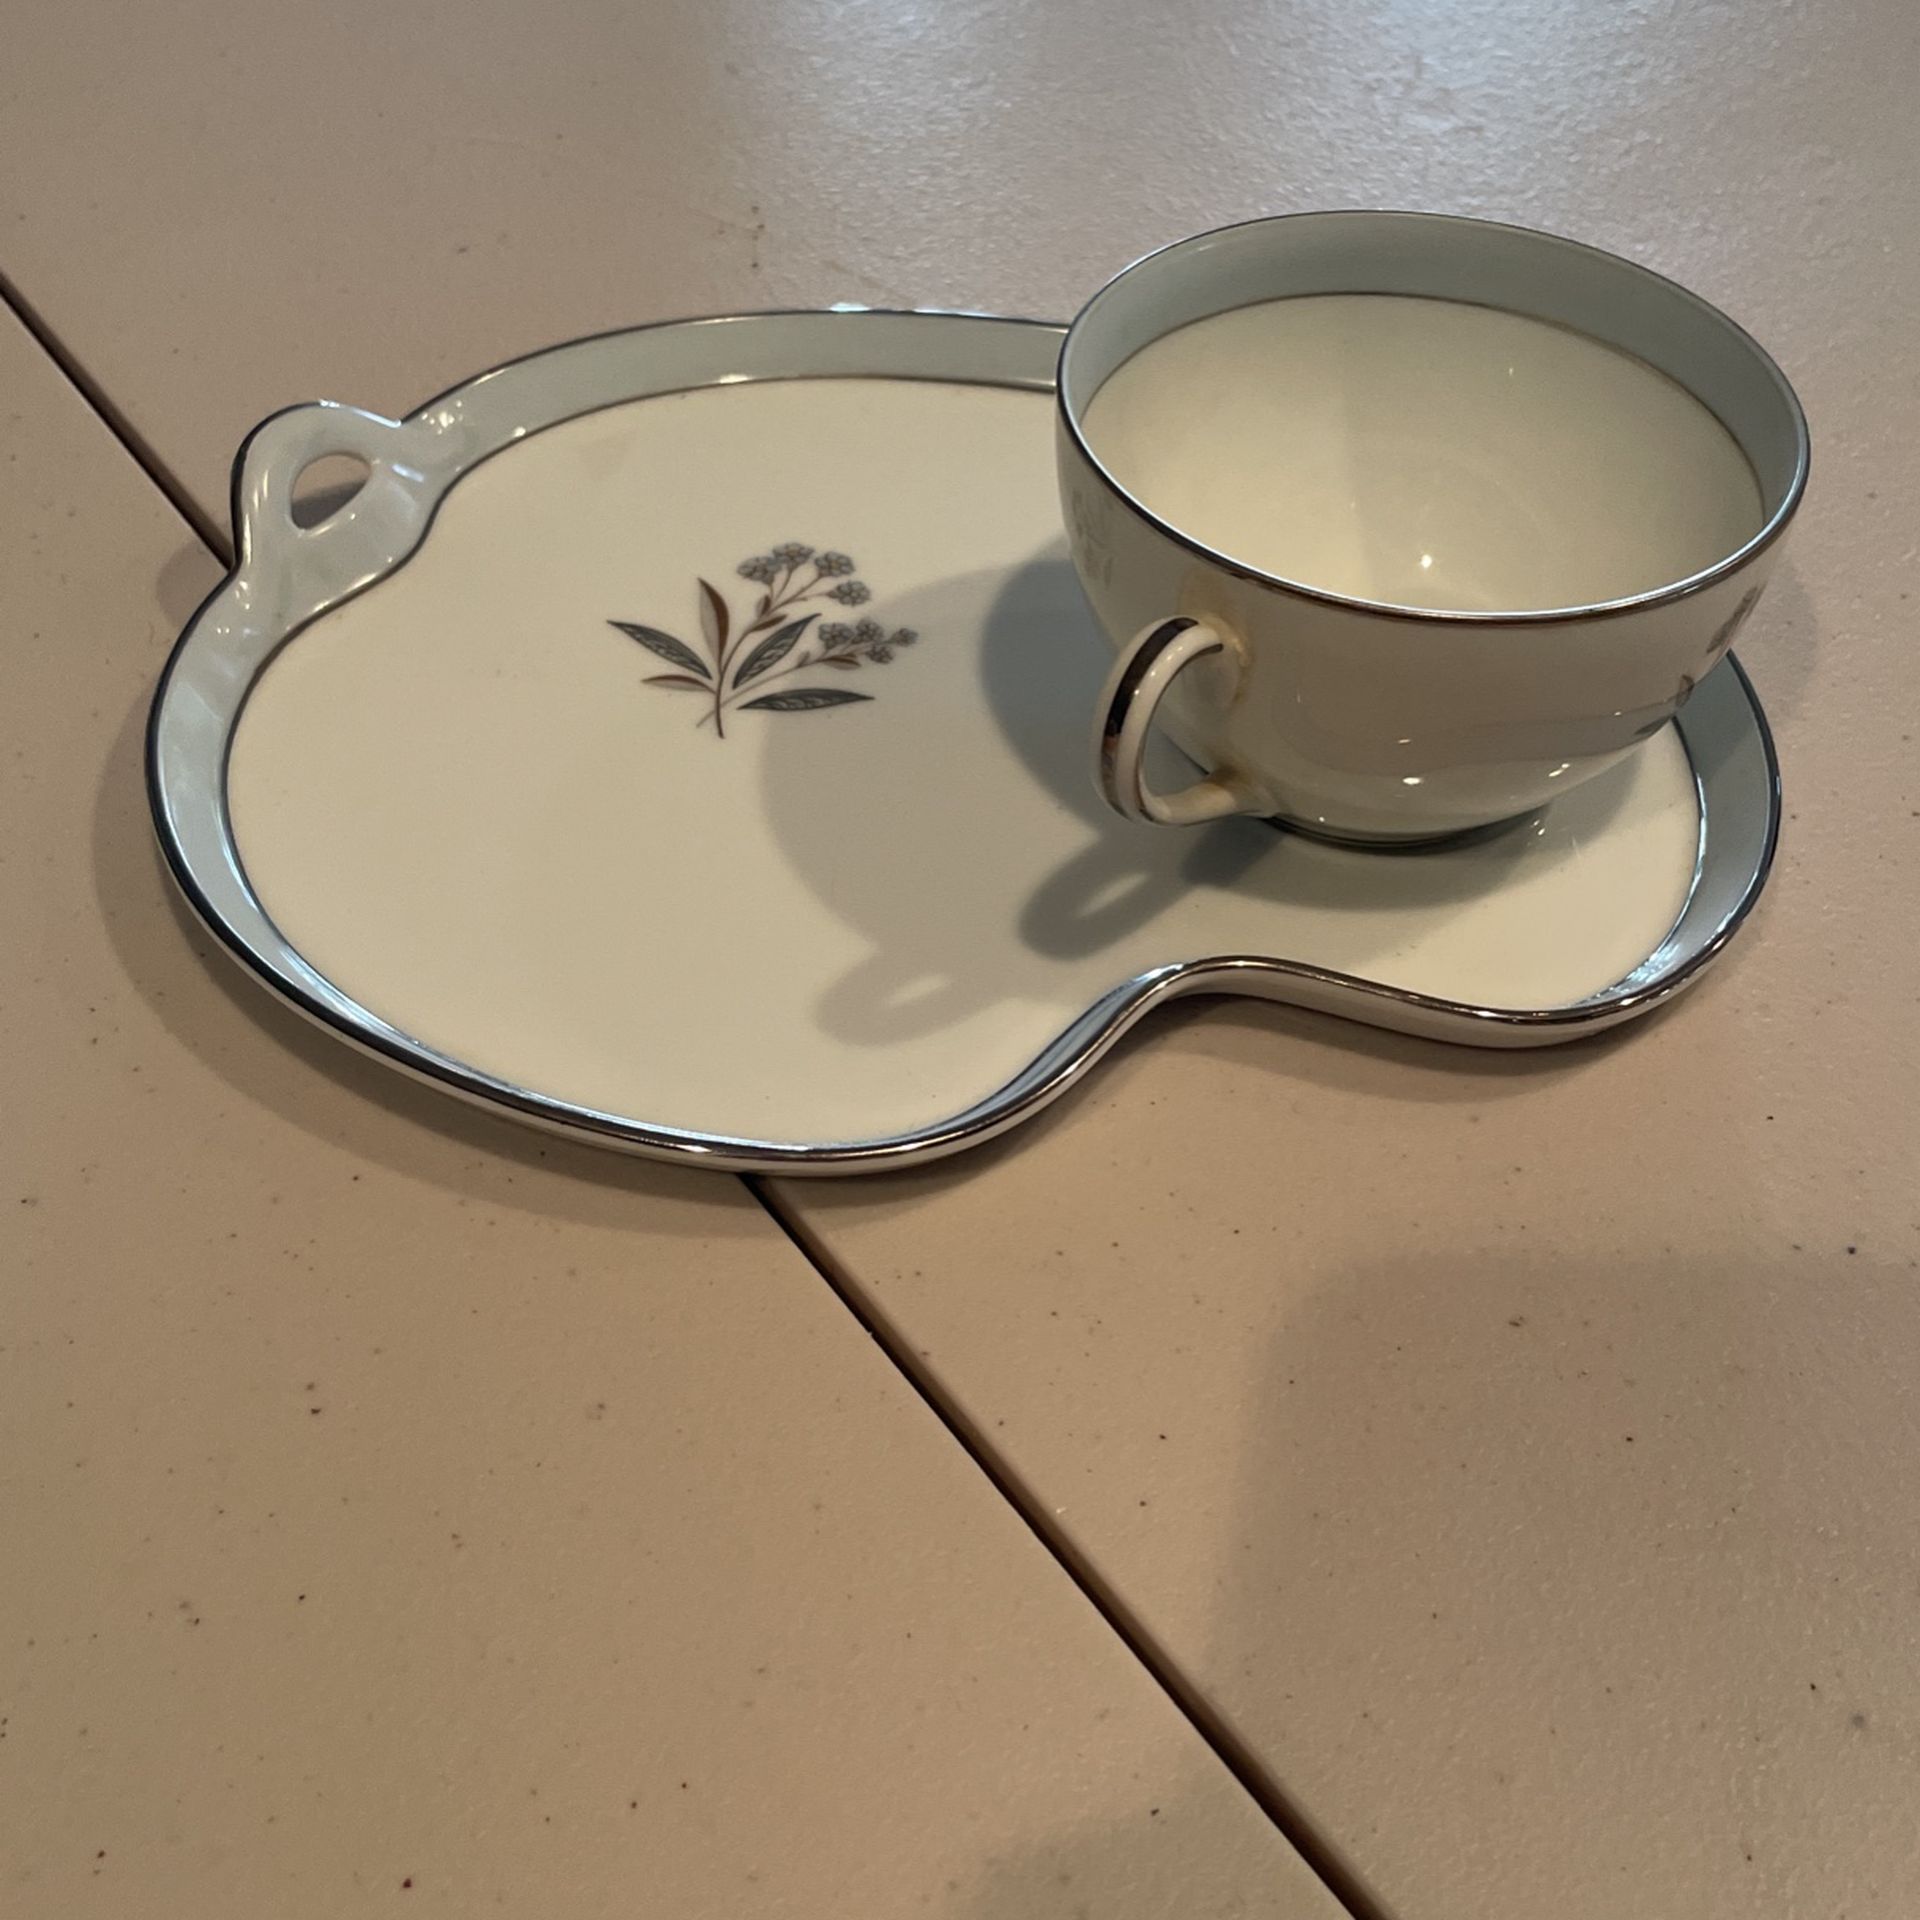 Noritake China Teacups and Saucers